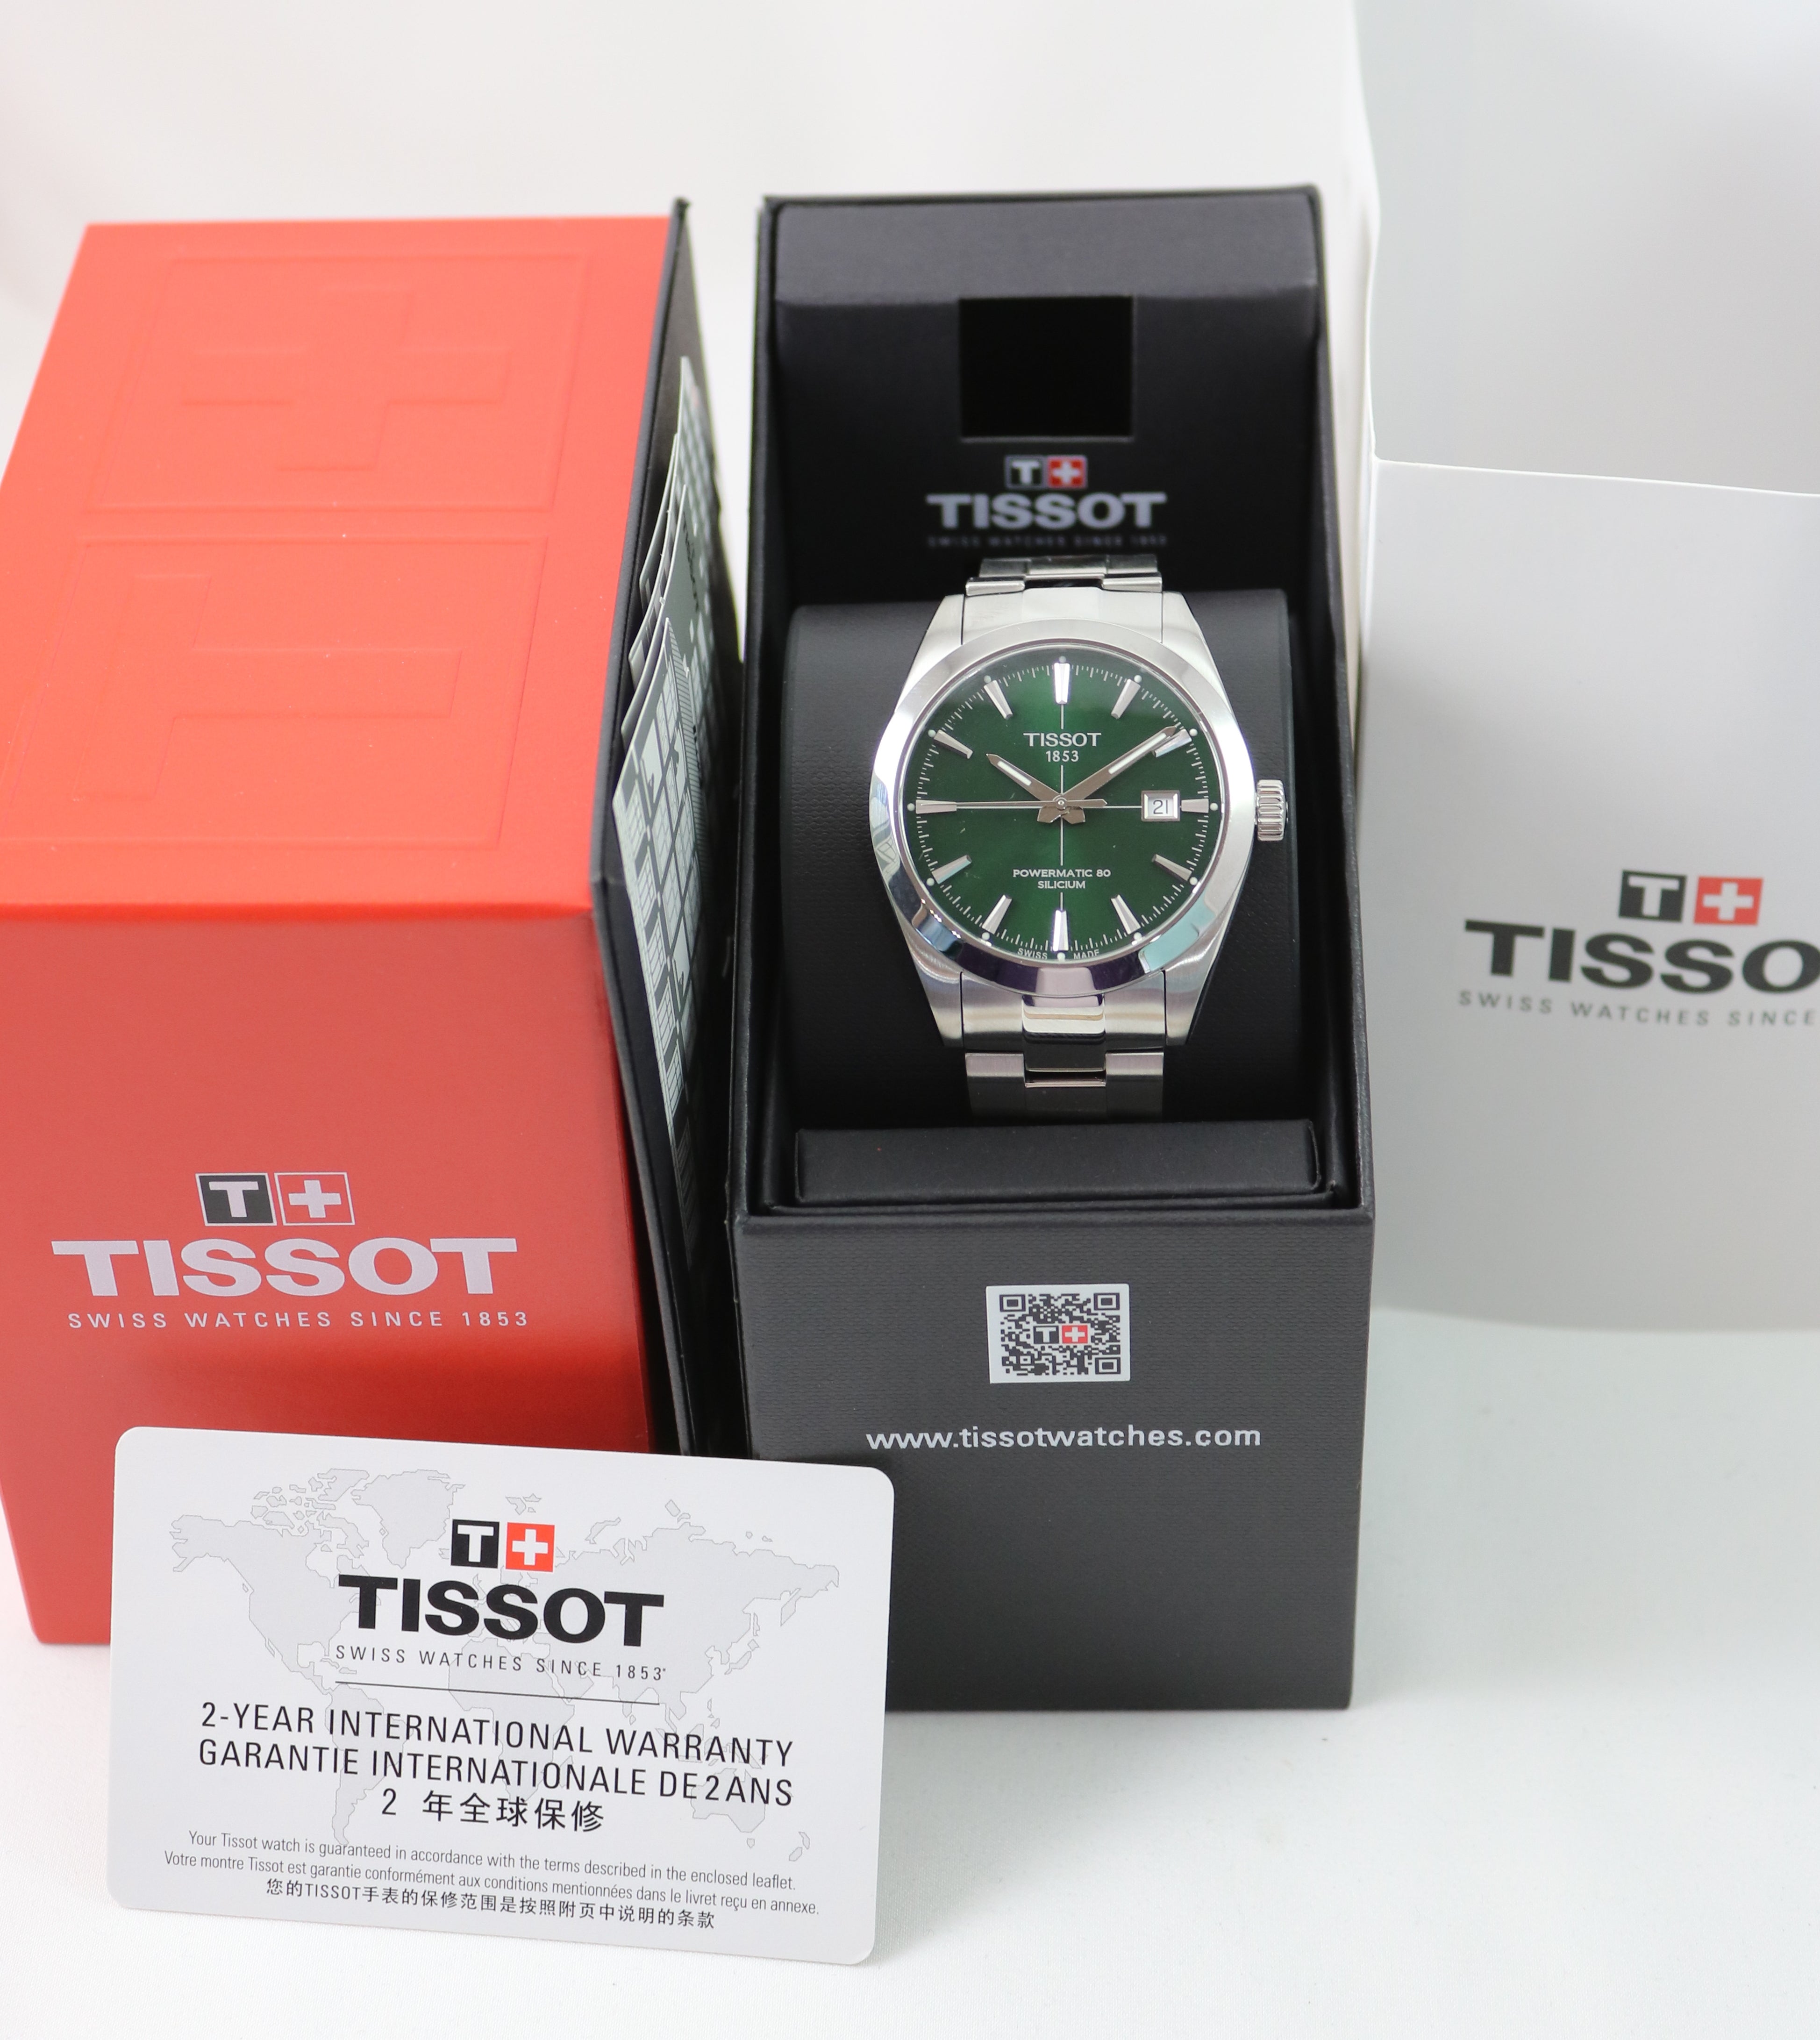 Tissot Gentleman Powermatic 80 Silicium Green Dial Stainless Watch